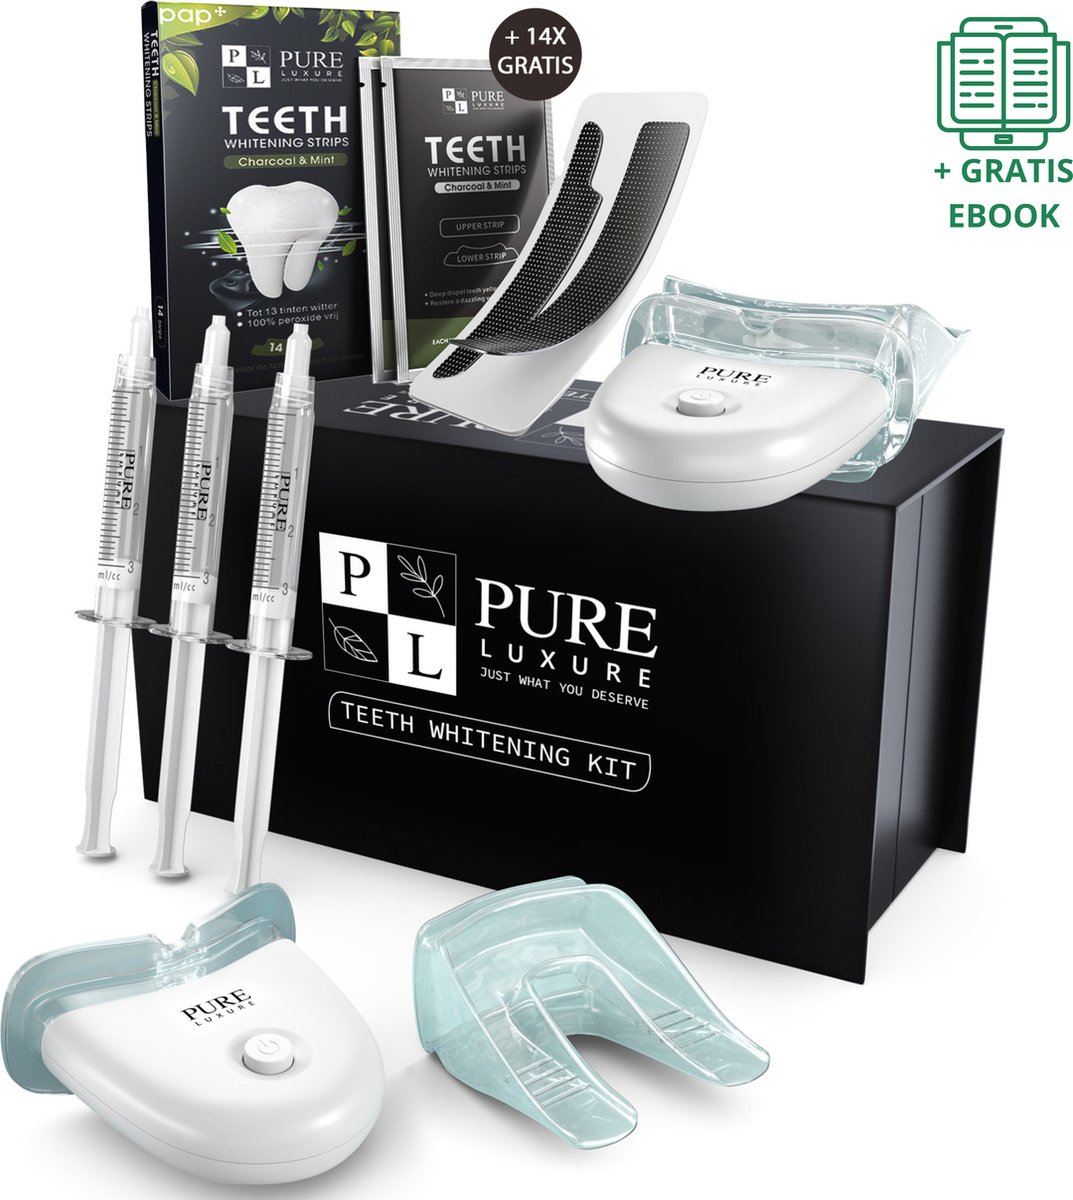 Pure Luxure Teeth whitening kit zonder peroxide met teeth whitening strips - tanden bleken - tandenbleekset - tandenblekers - witte tandenbleekstrips - met handleiding en ebook - Pure Luxure